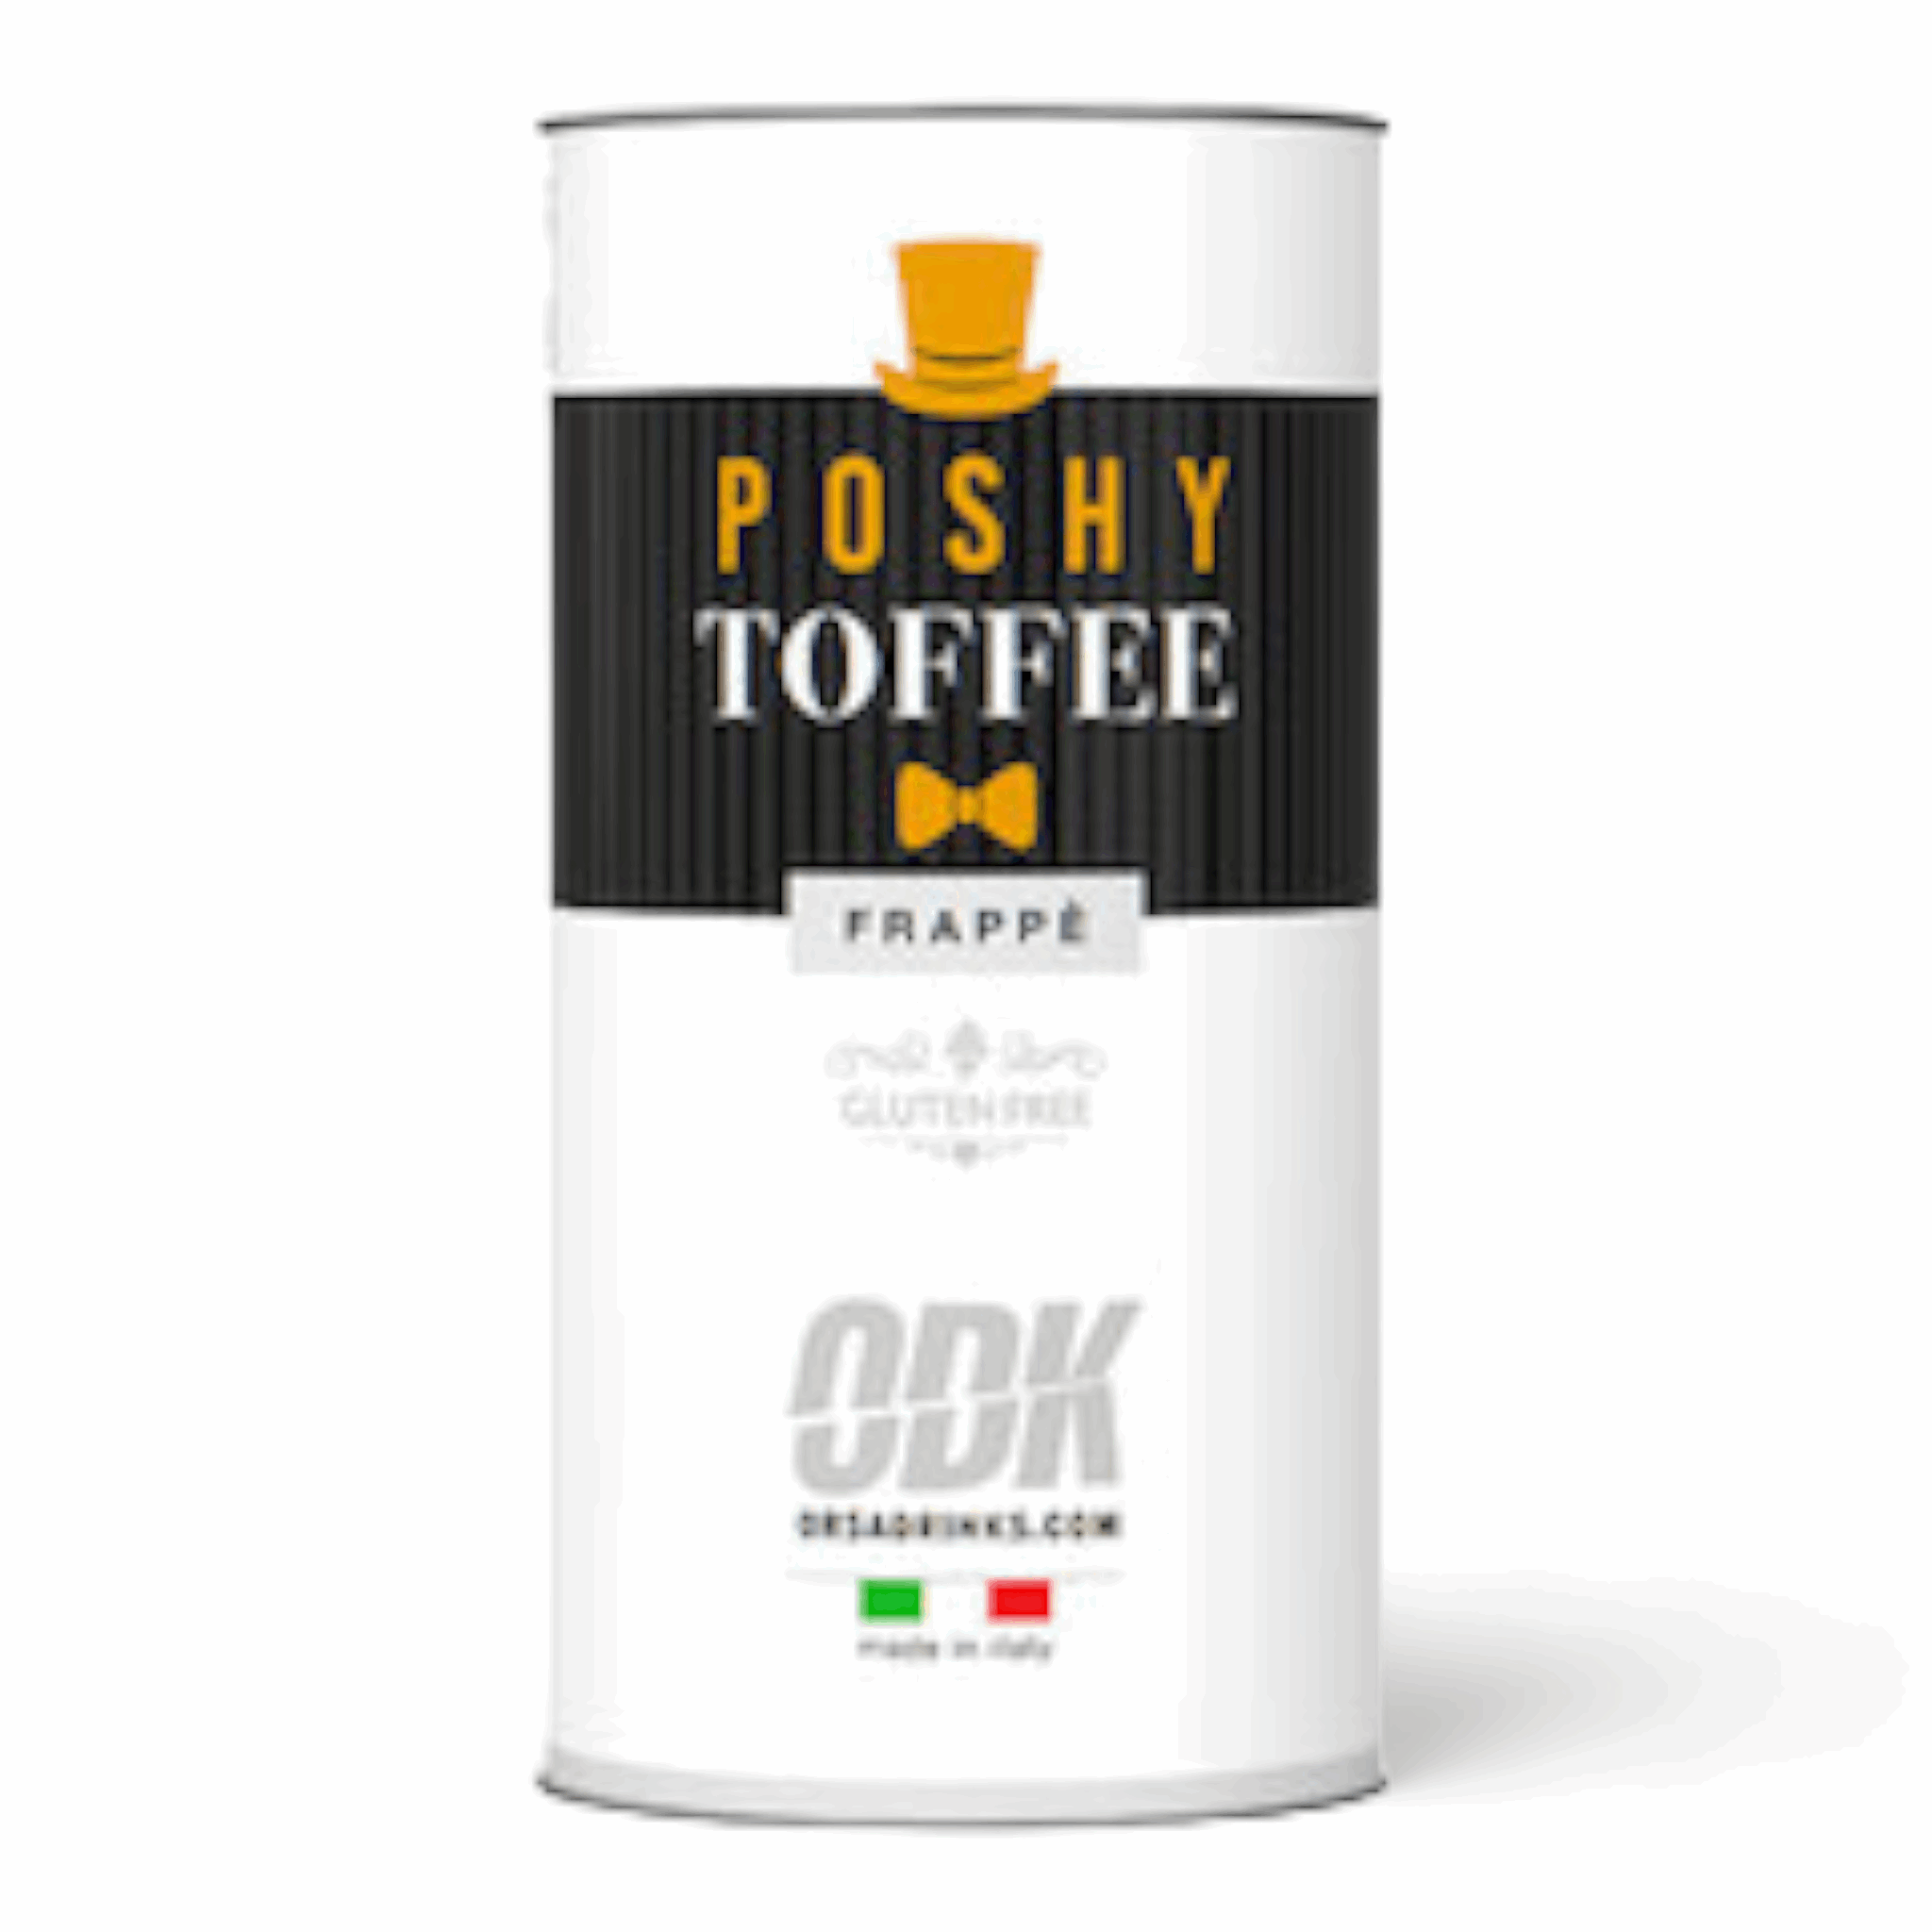 ODK Frappè Poshy Toffee - 1 kg